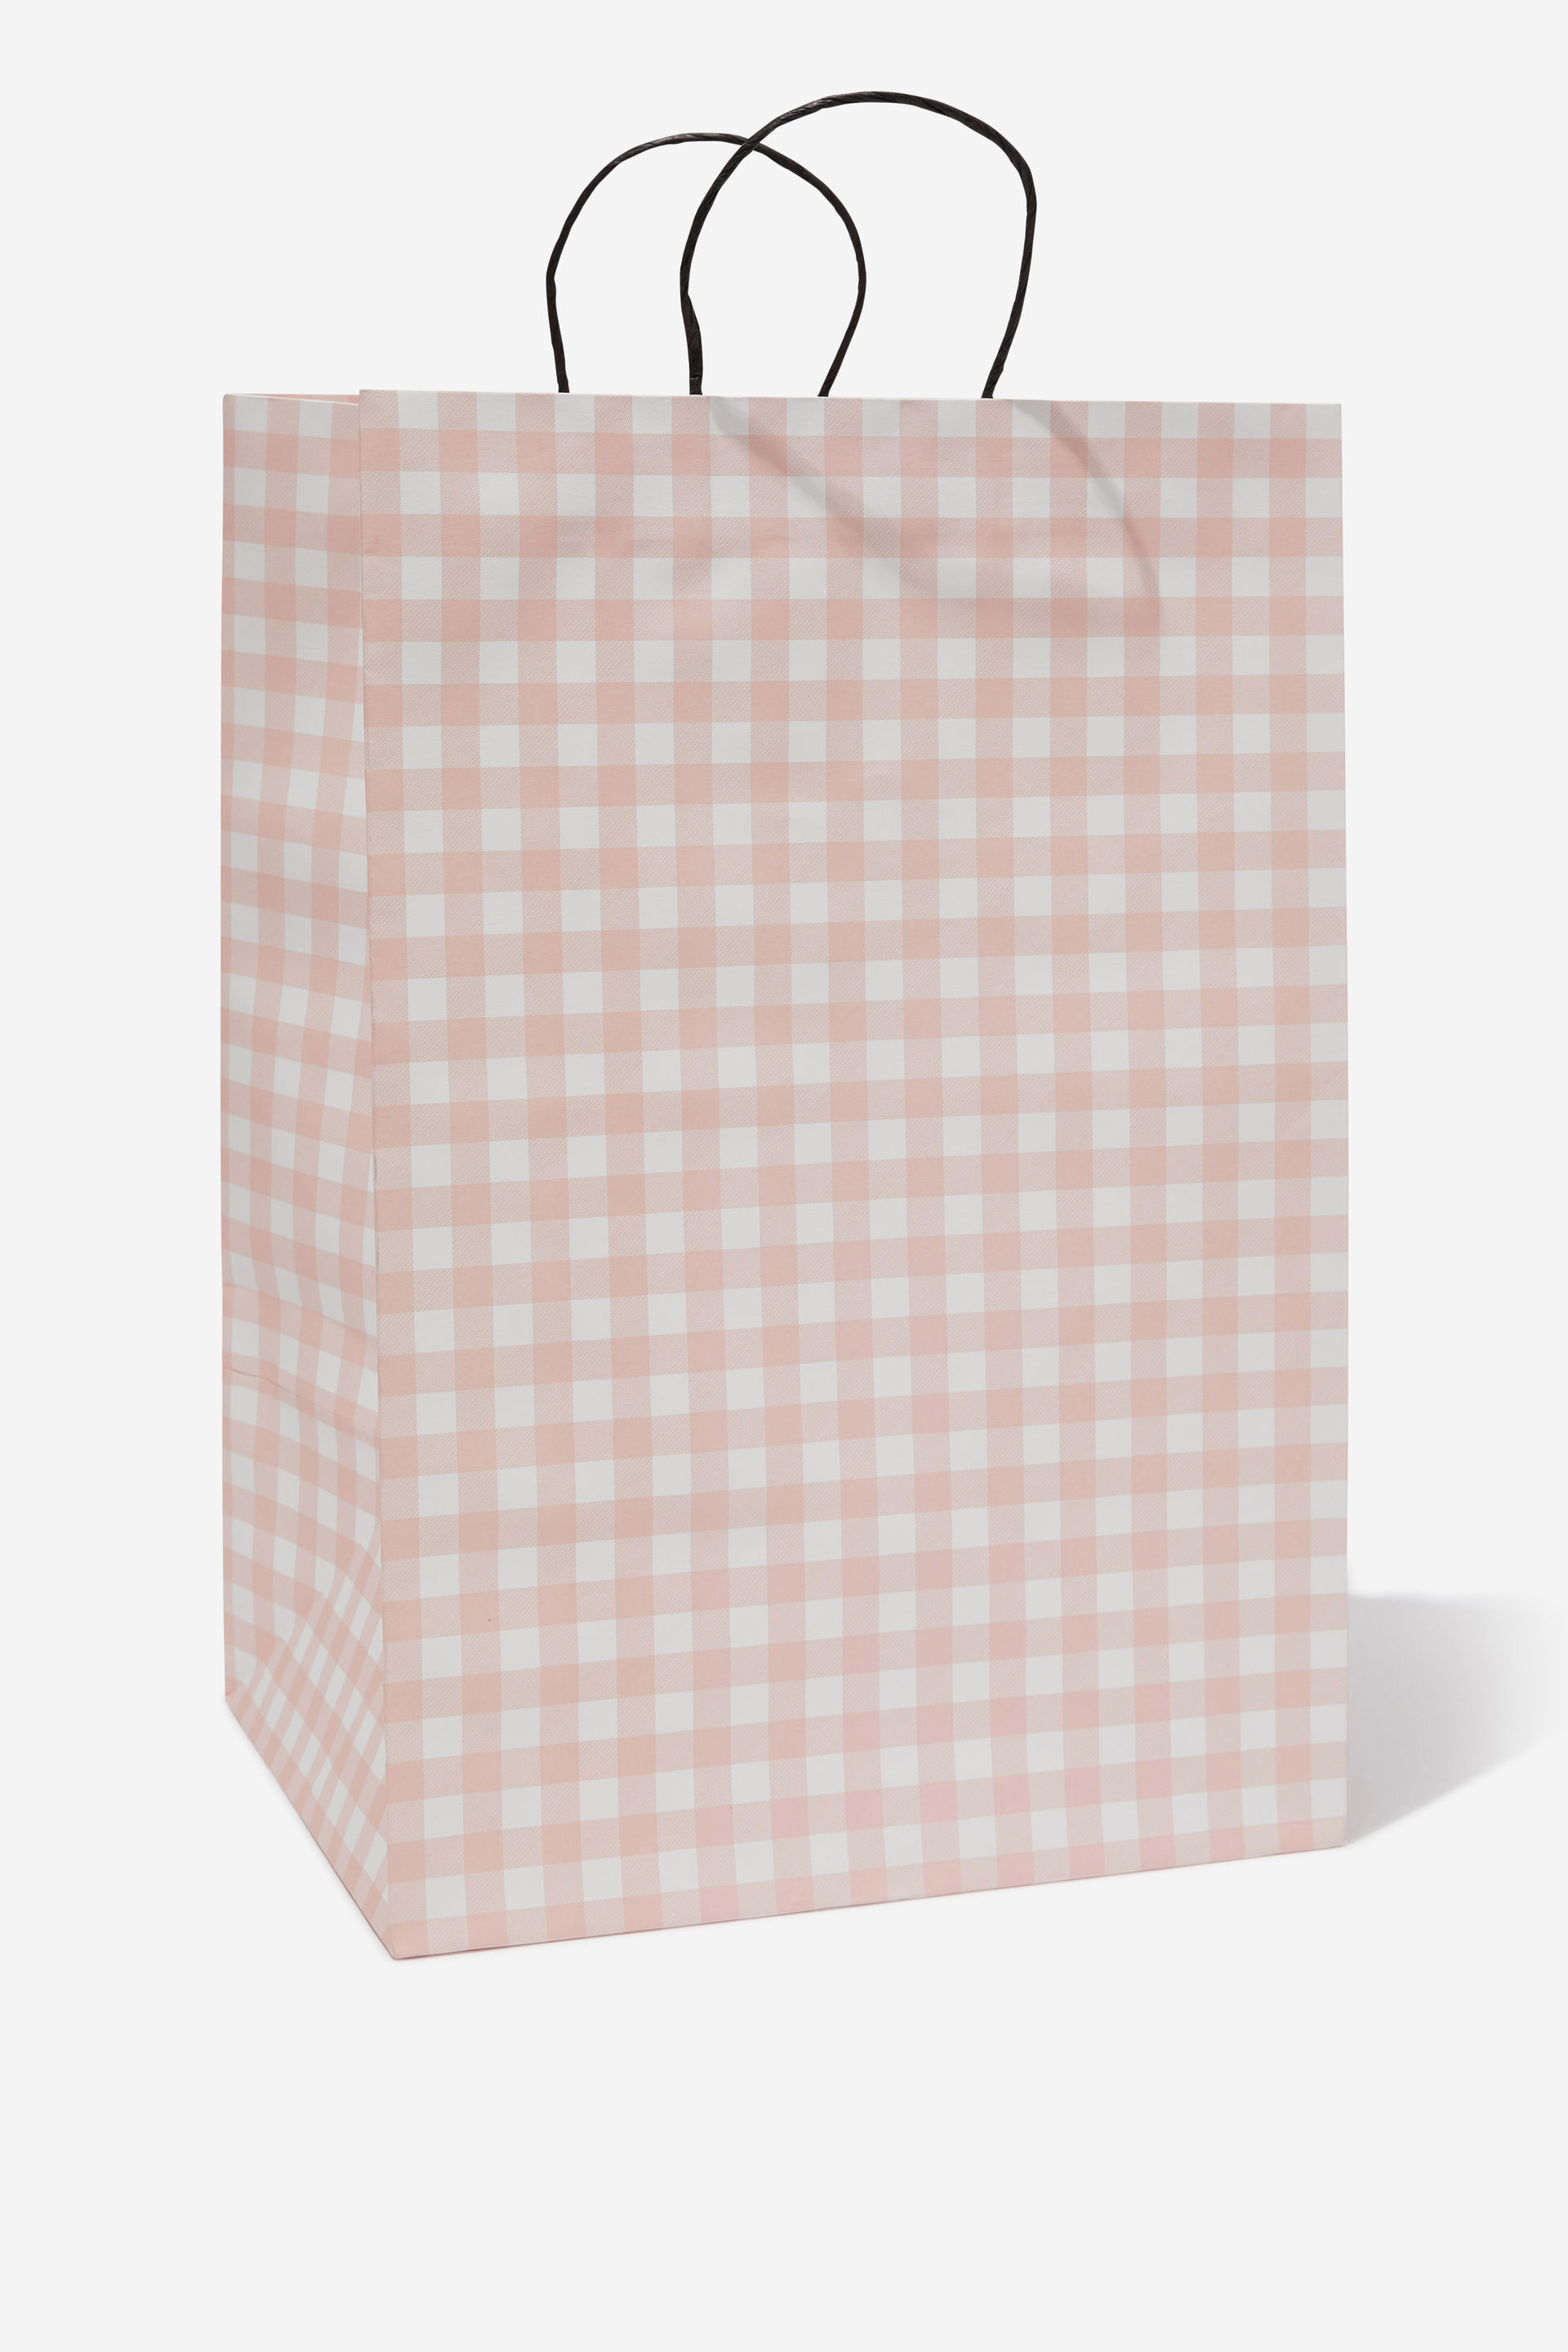 Get Stuffed Gift Bag - Large